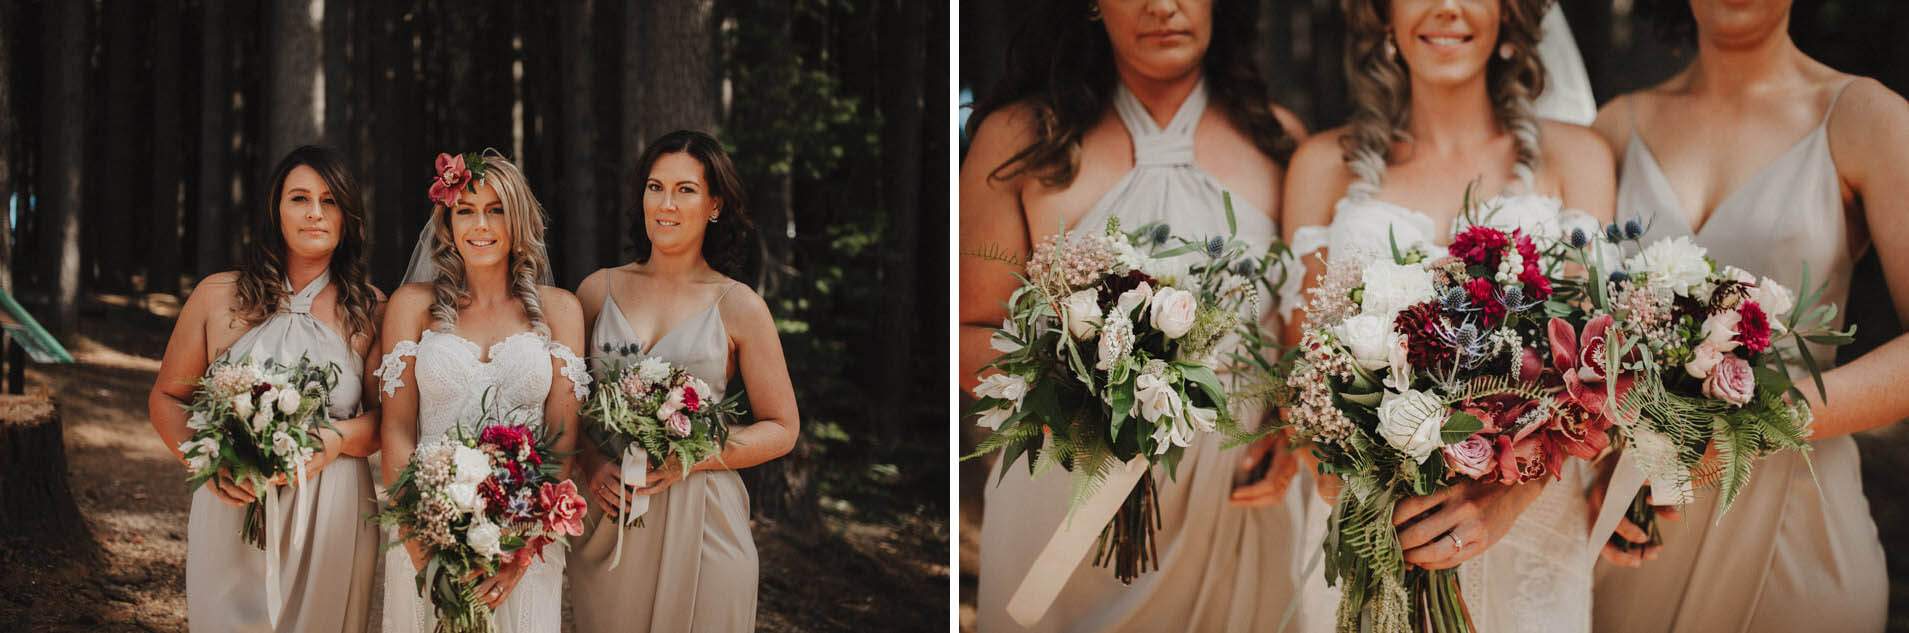 suger-pine-walk-wedding (Corinna & Dylan)_130(2710)2.jpg